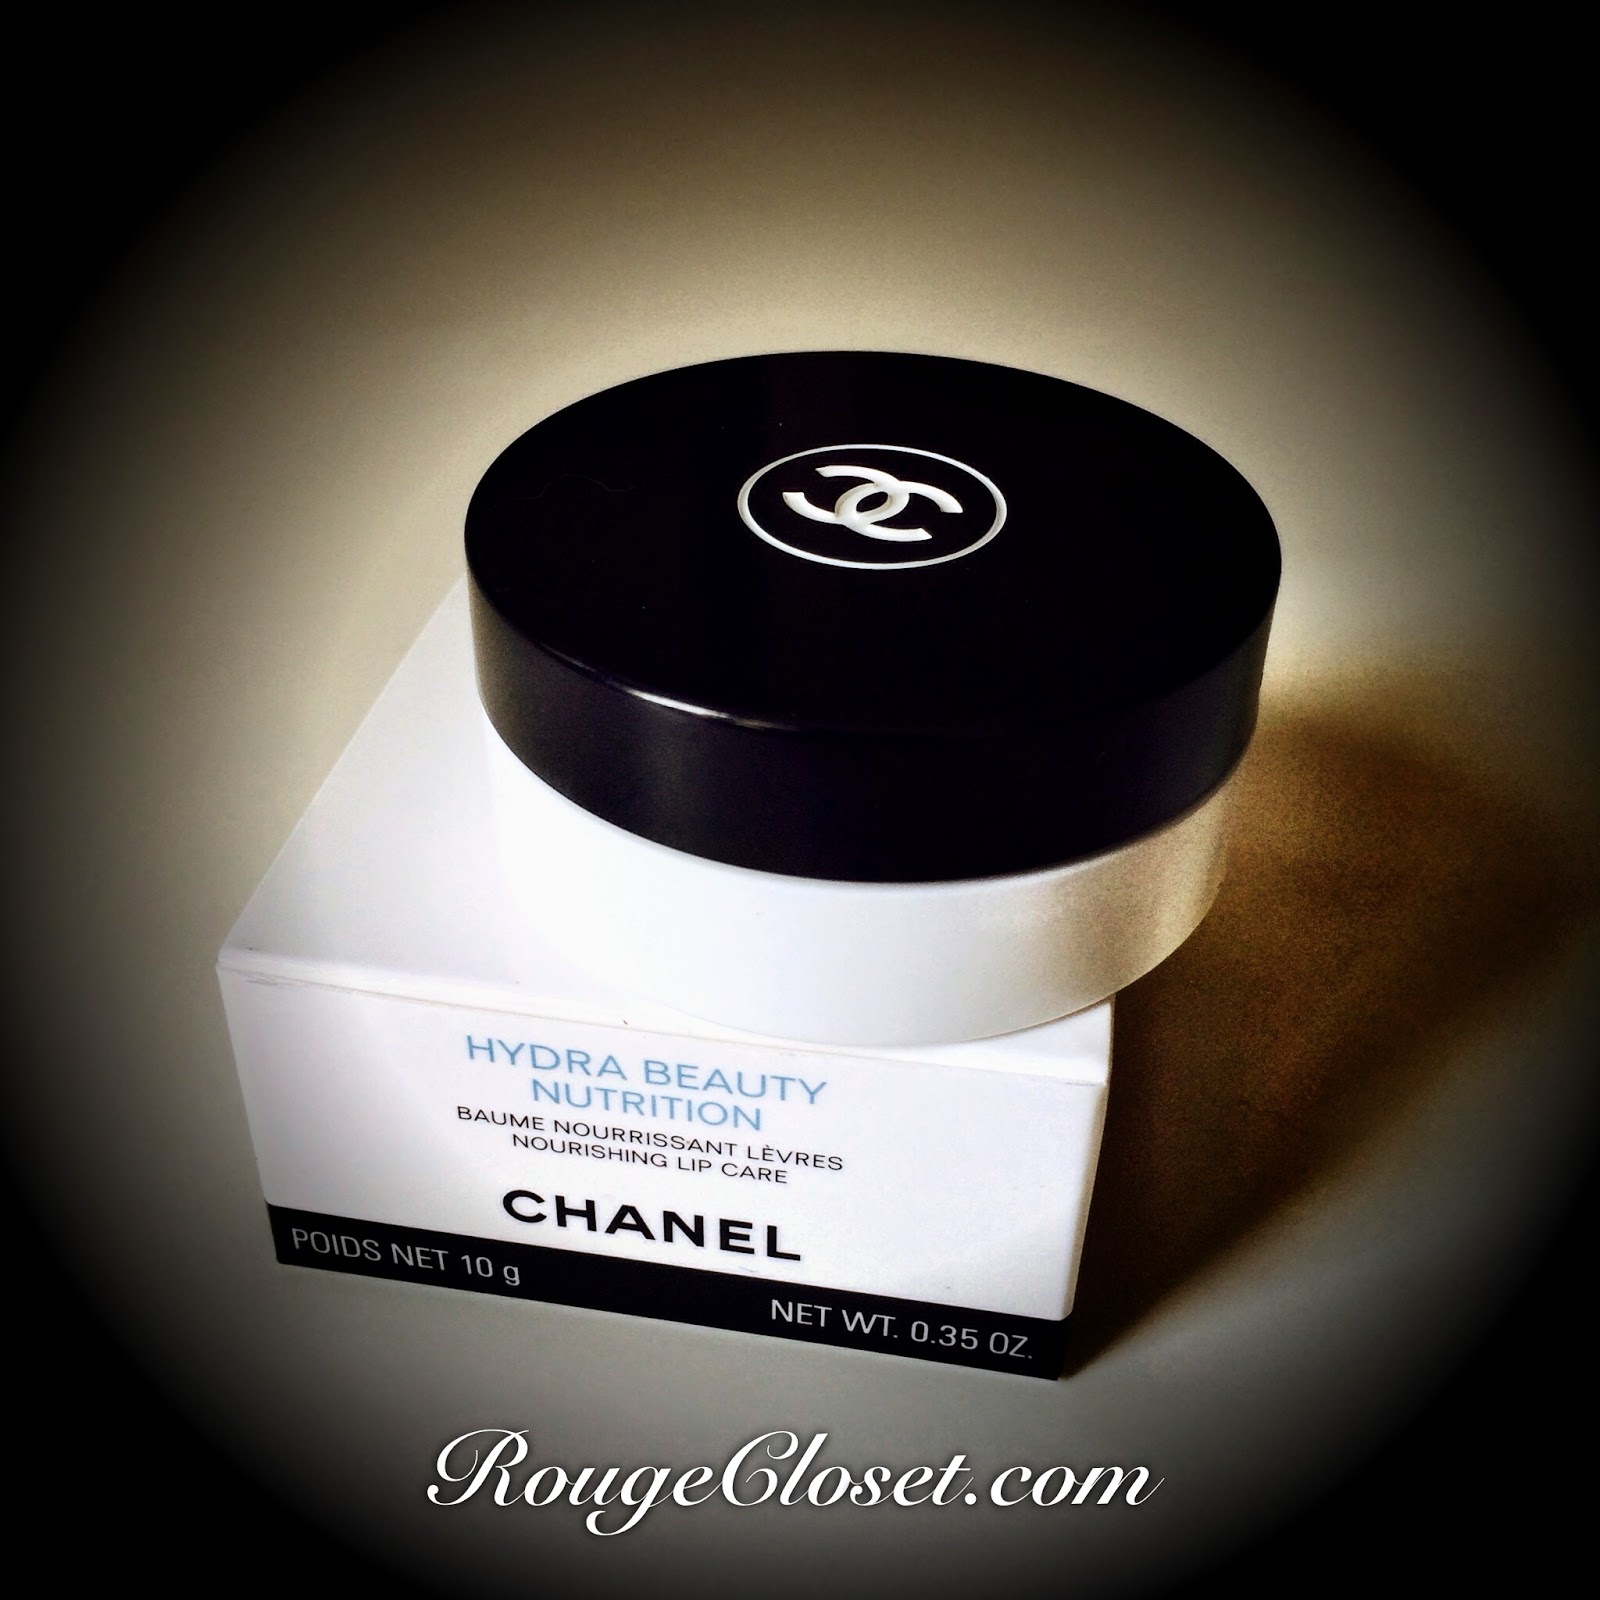 Chanel hydra beauty lip balm браузер тор для ios скачать на русском с официального сайта gidra